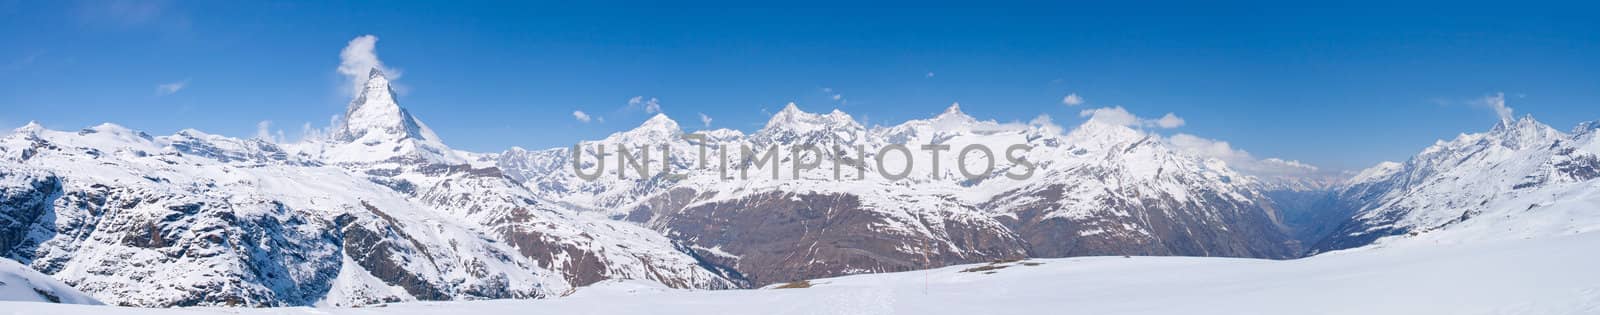 Snow Mountain Range Matterhorn by vichie81